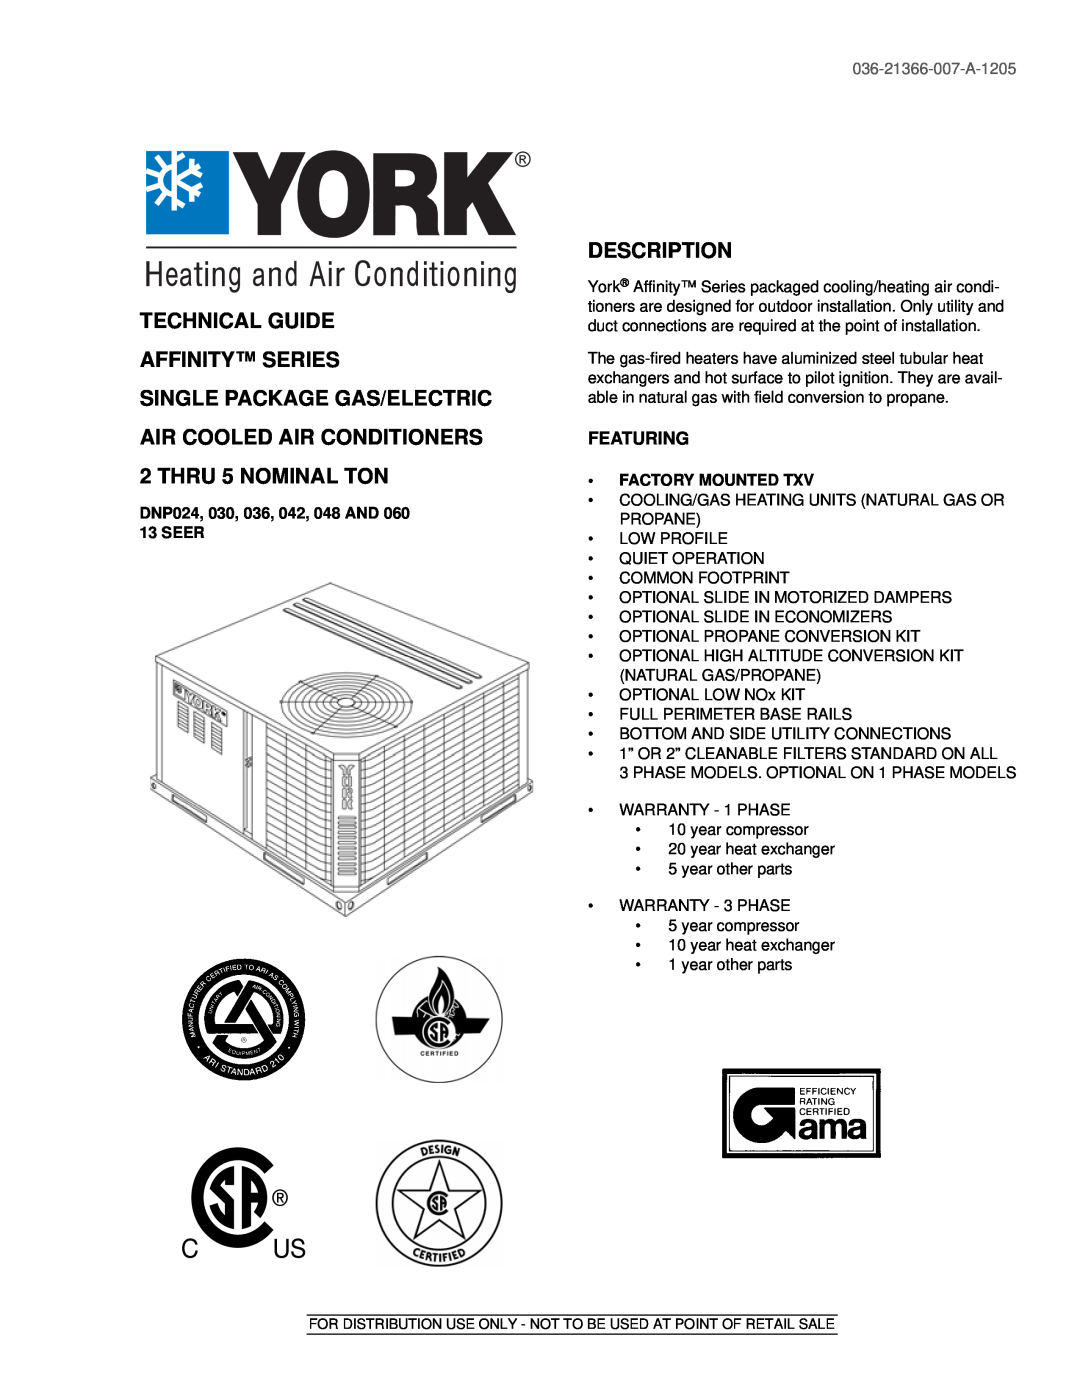 York DNP048, DNP060 warranty Technical Guide Affinity Series, Description, 036-21366-007-A-1205, Factory Mounted Txv 